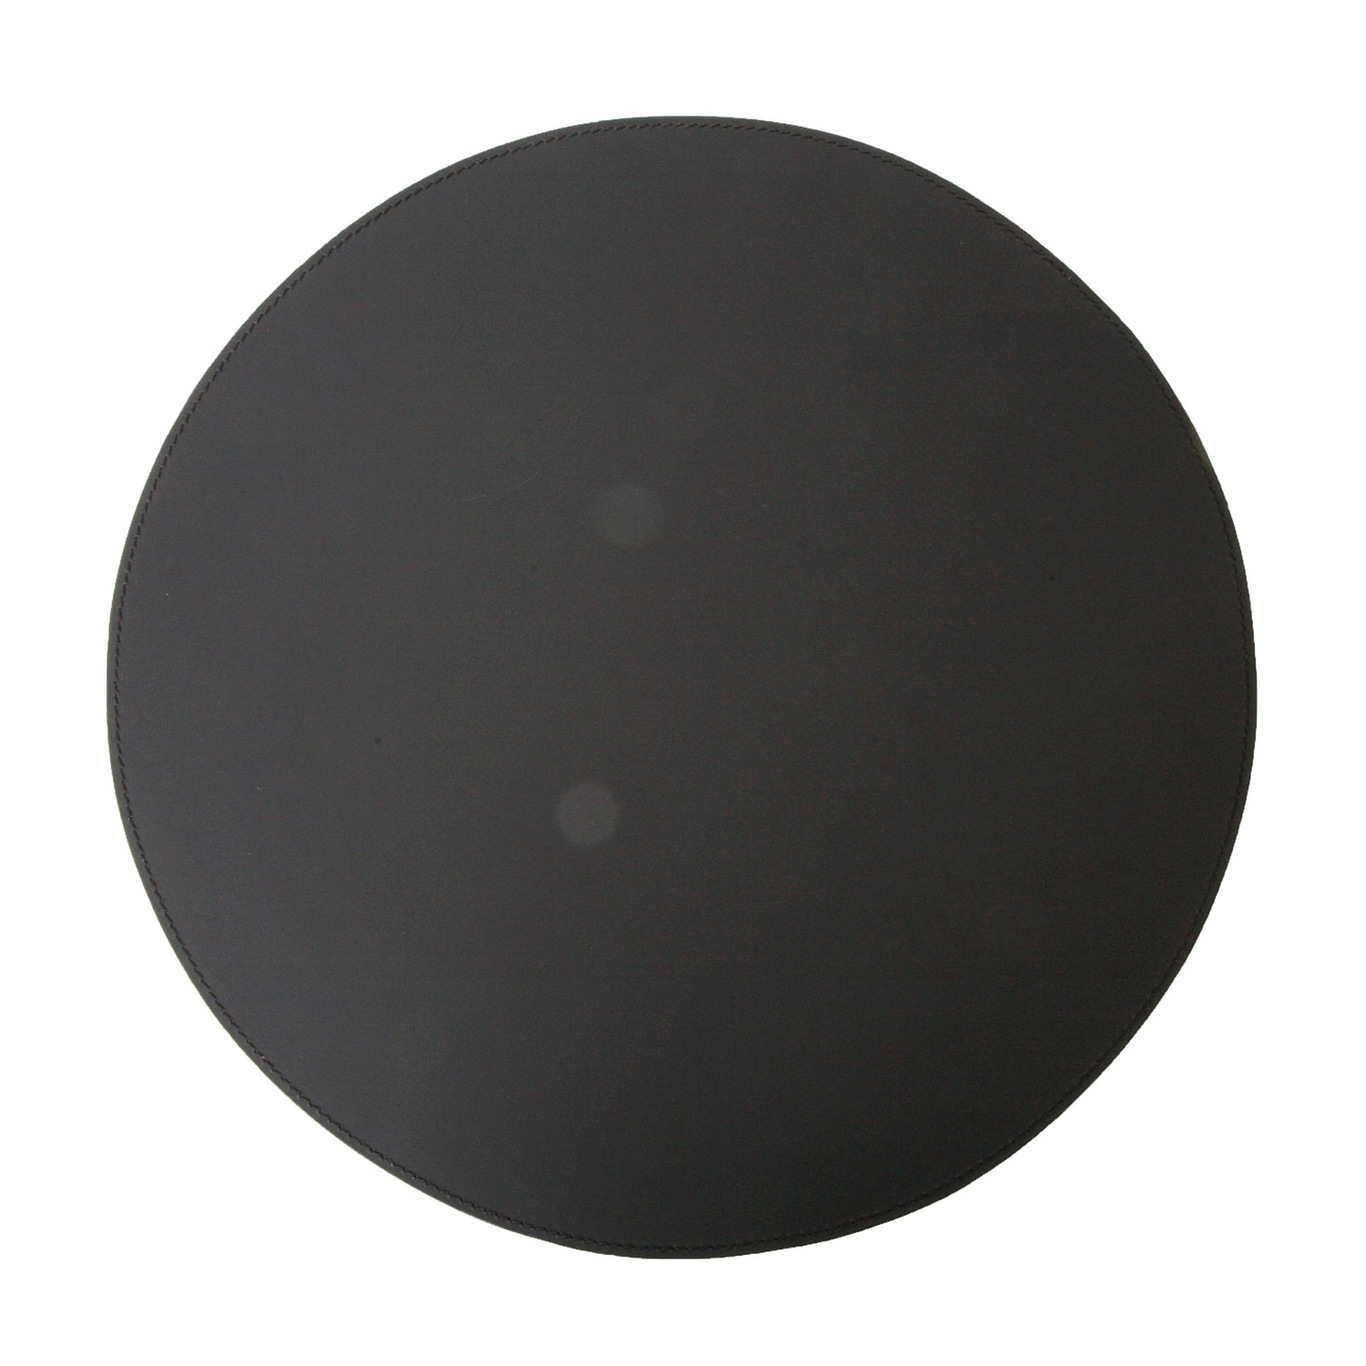 Placemat Round Ø38cm, Black